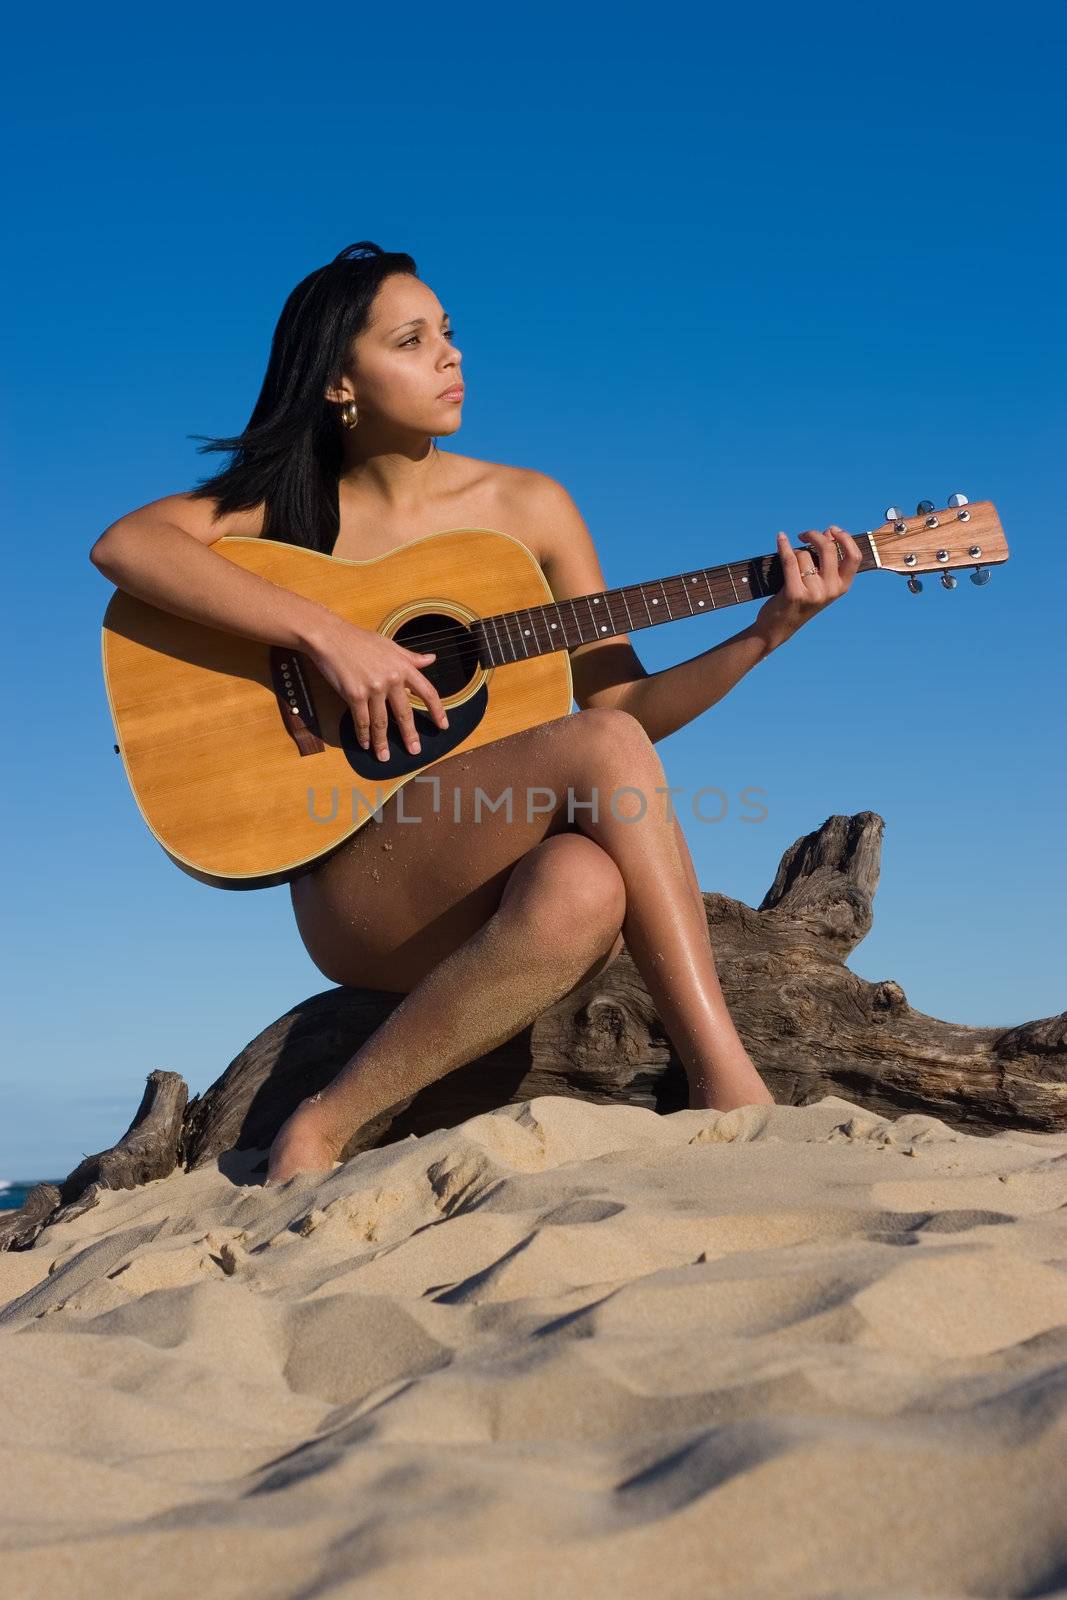 Nude Guitarist by nightowlza